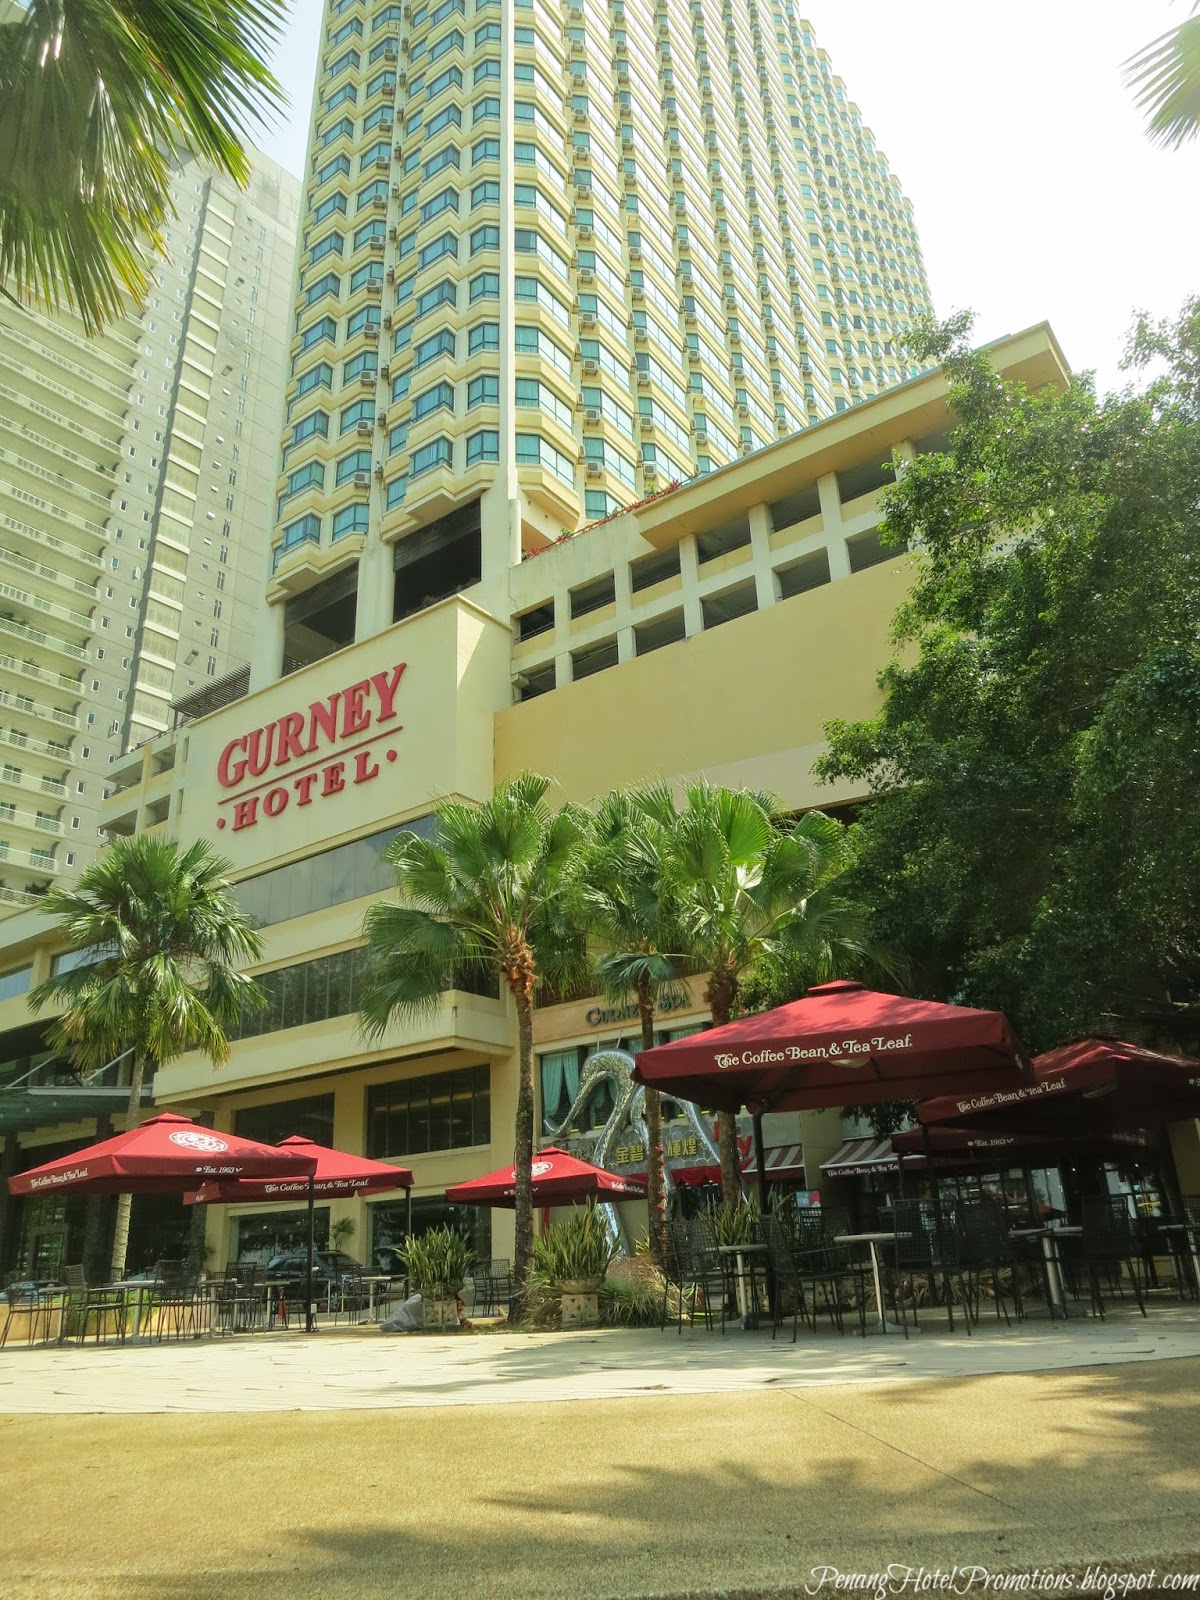 Penang Hotel Promotions: The Gurney Resort Hotel & Residences - The Gurney Resort Hotel And Residences